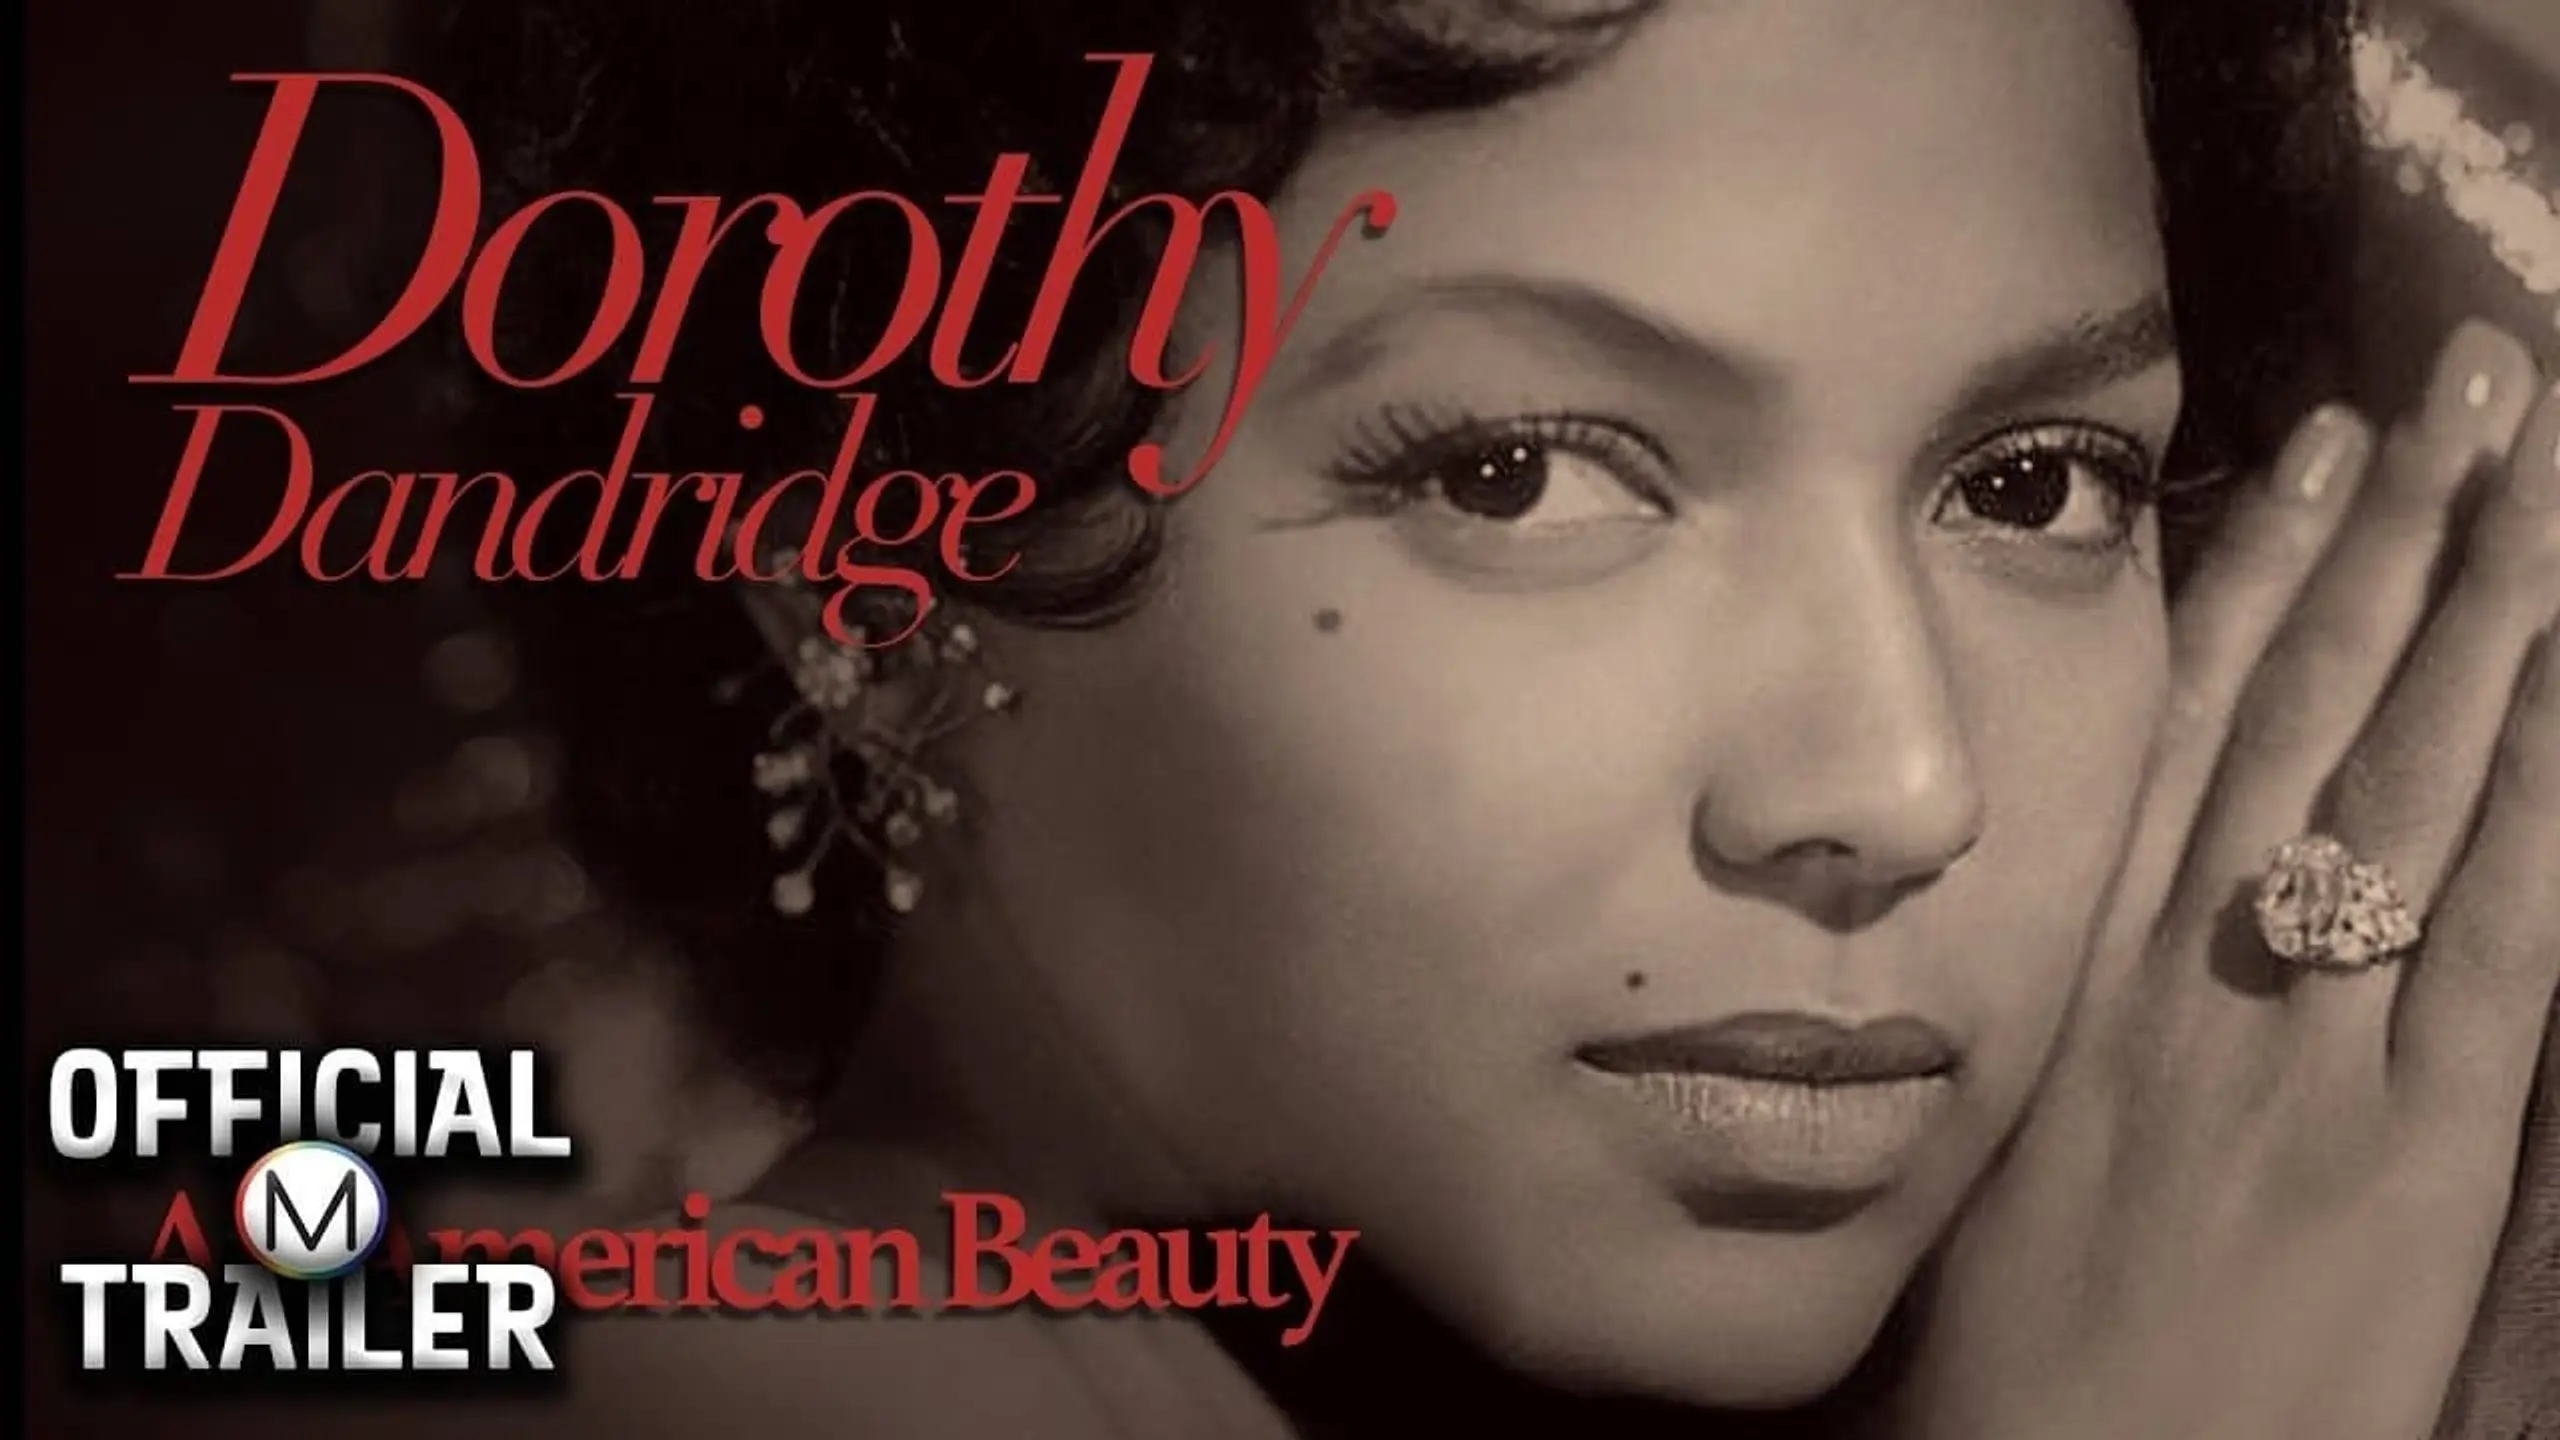 Dorothy Dandridge: An American Beauty